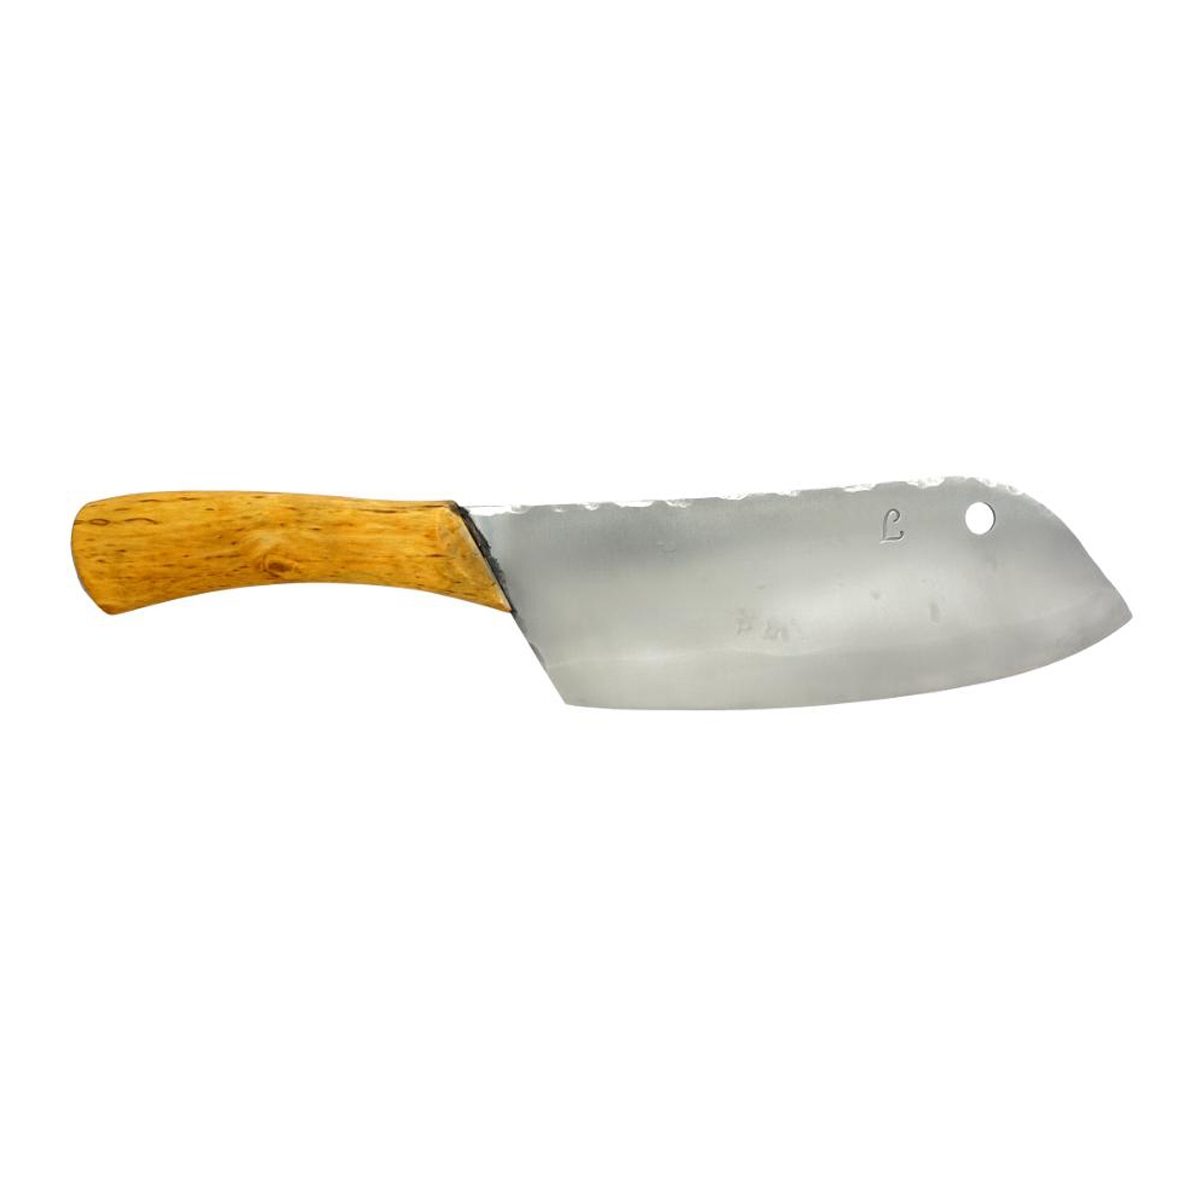 Nordklinge Messer Vankka Suuri 18,9 cm mit Extraschliff & satiniert